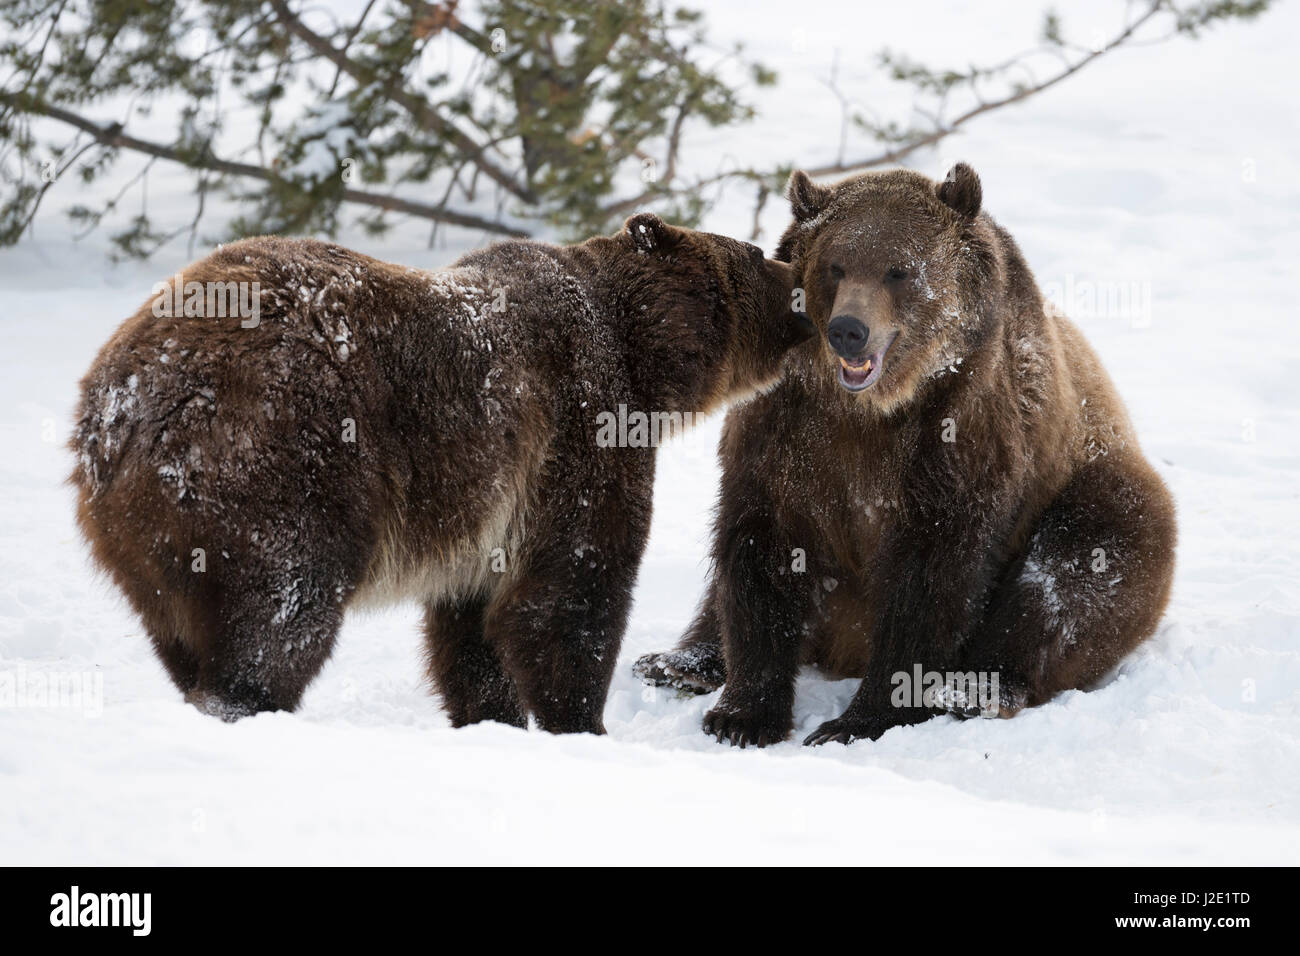 North American brown bears / Grizzly bears / Amerikanischee Braunbären ( Ursus arctos horribilis ) in winter, snow, captive, in funny situation, Monta Stock Photo